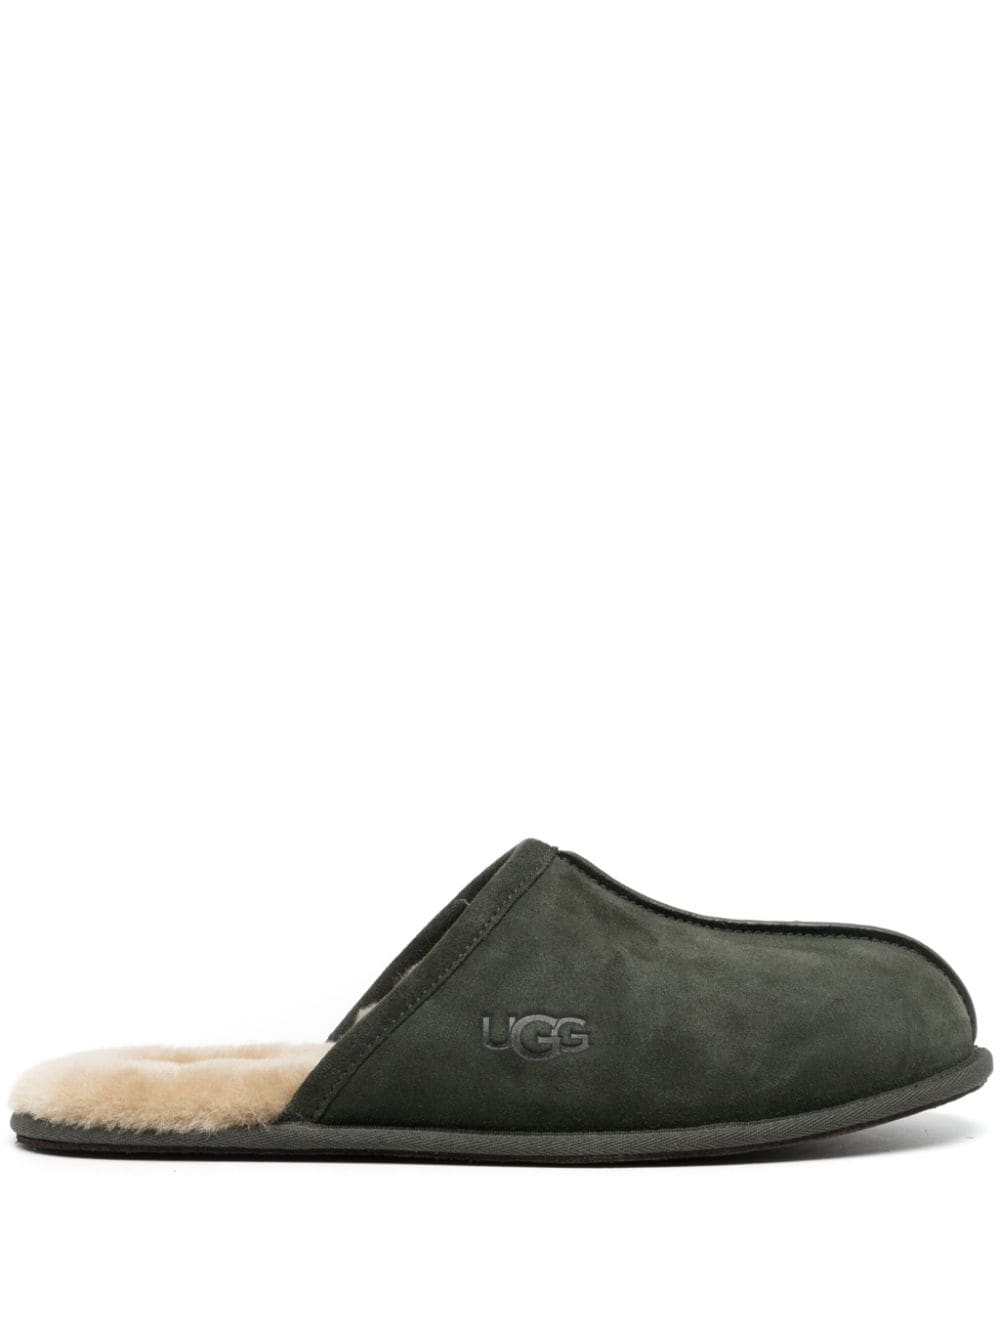 UGG Scuff sheepskin slippers - Green